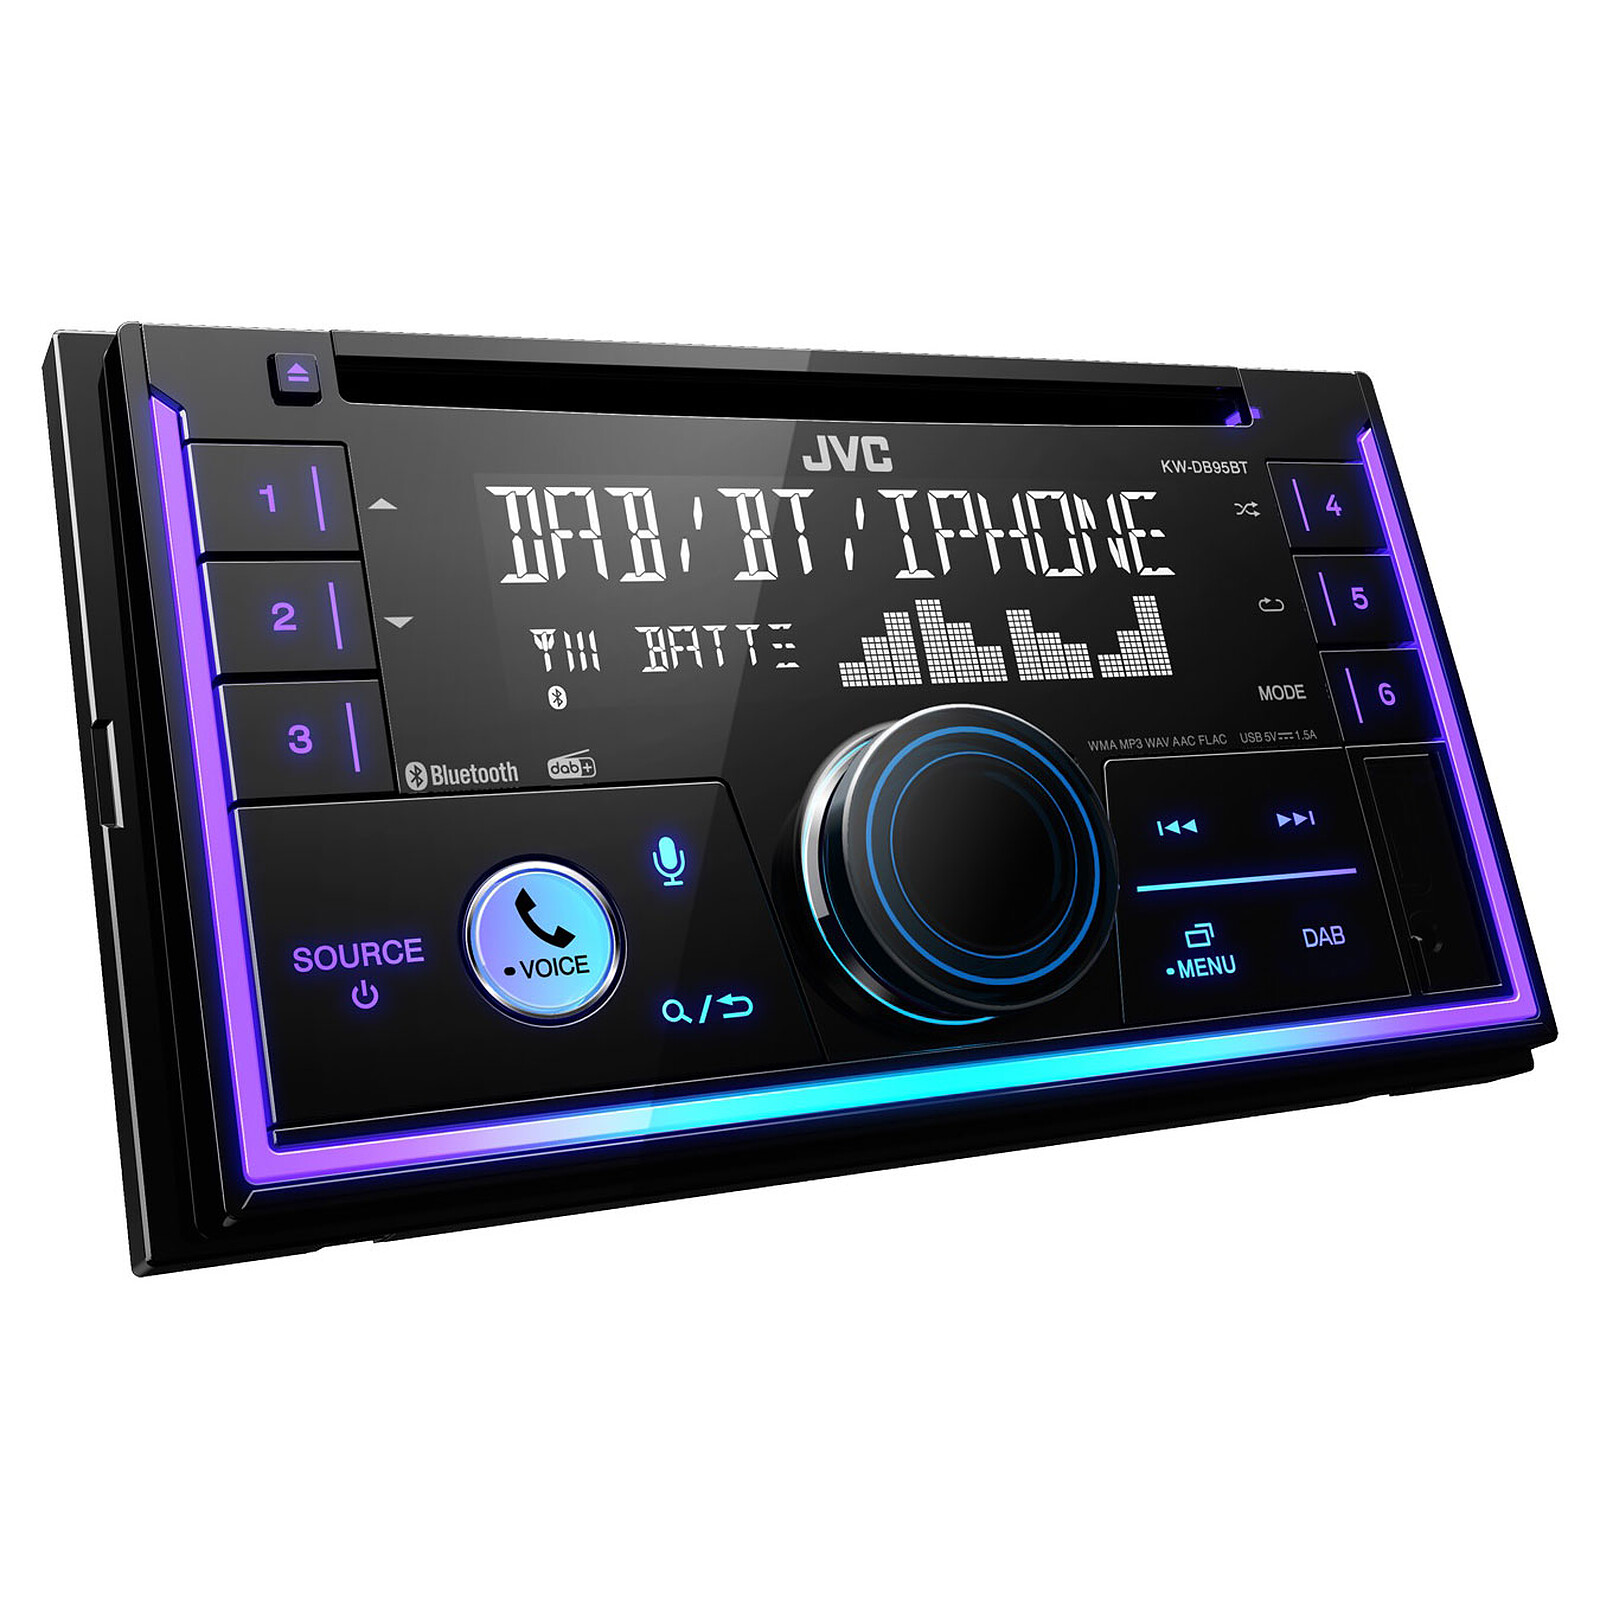 Alpine CDE-205DAB - Car stereo - LDLC 3-year warranty